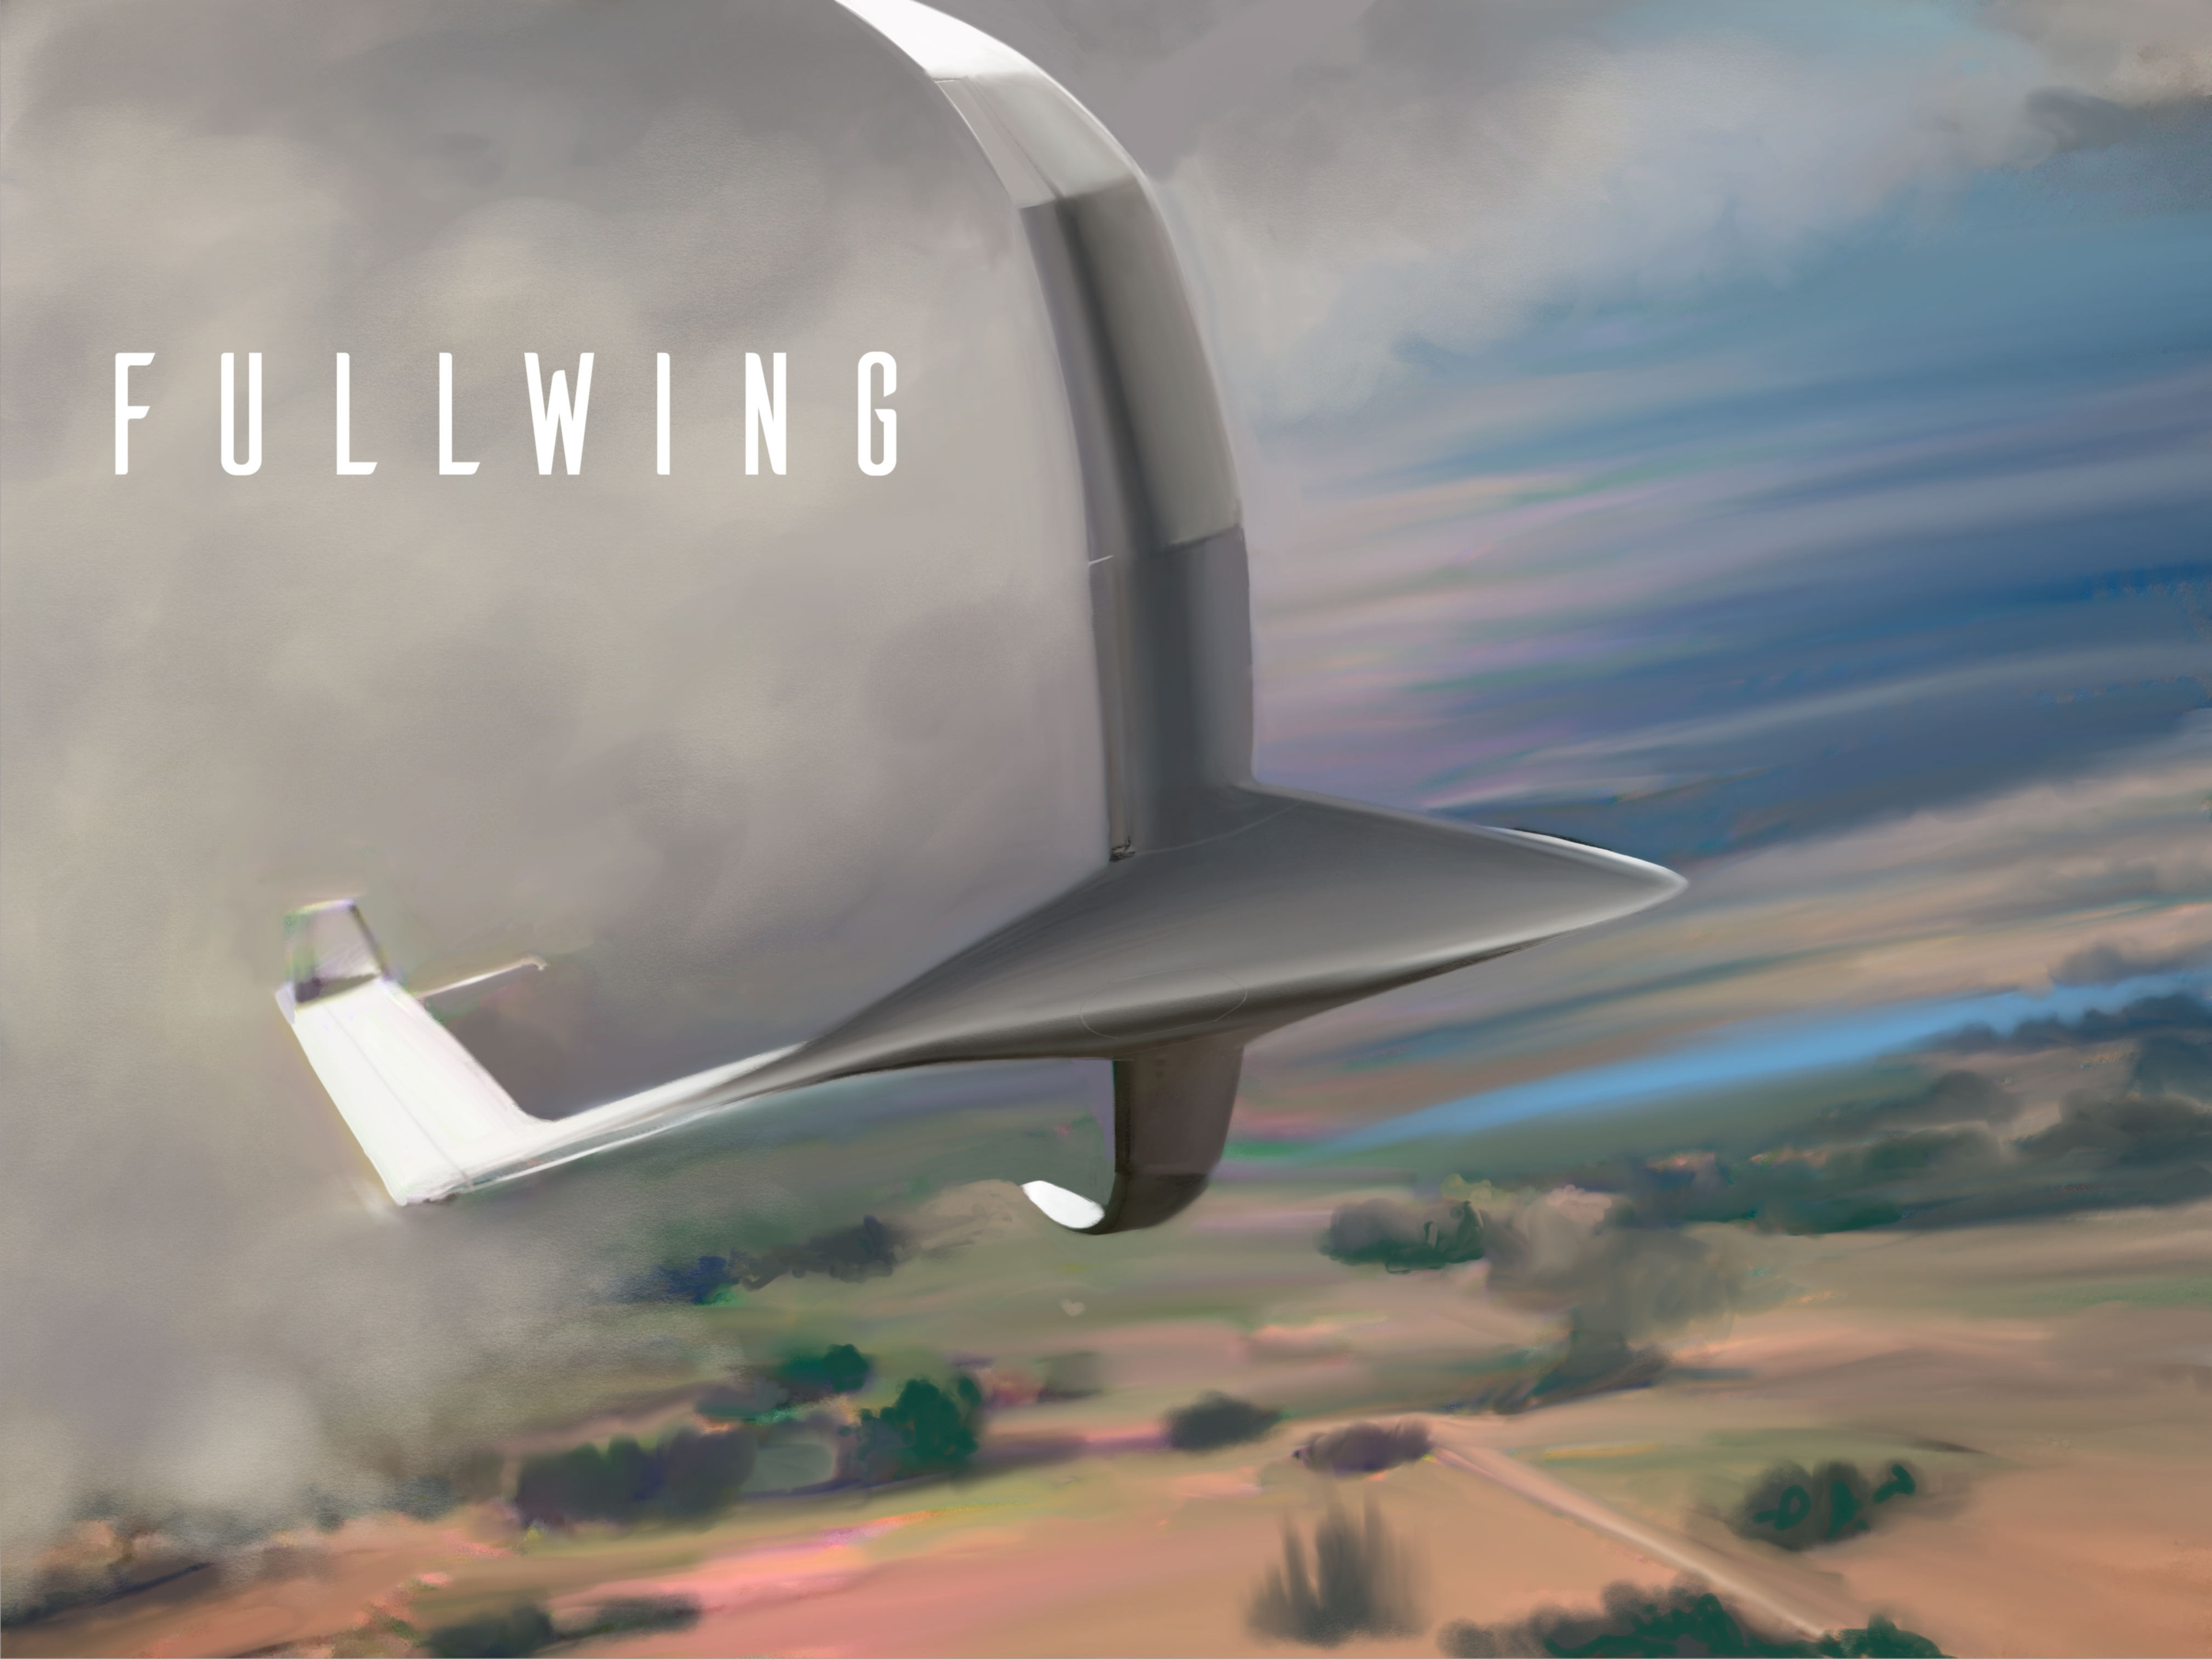 Fullwing Sailplane Glider concept 
sketch by Alan Mattanó SoaringStarsLab  2018